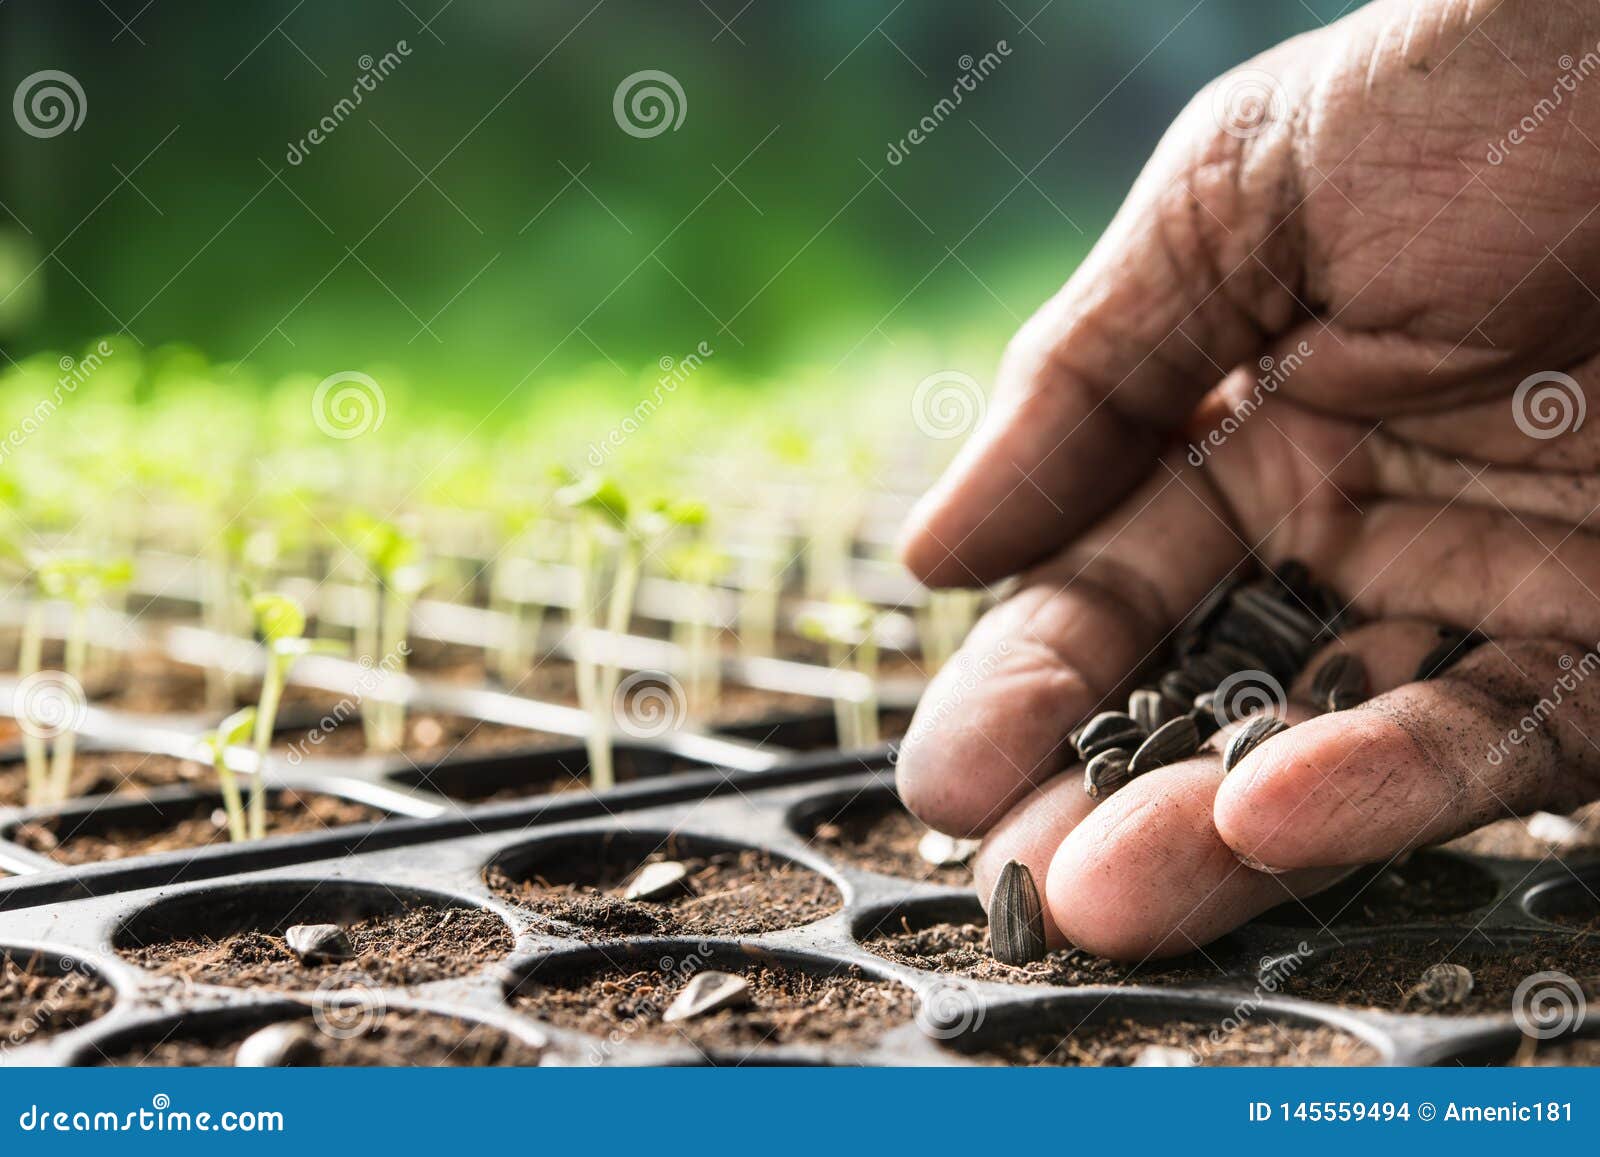 hand of farmer planting seeds in soil in nursery tray